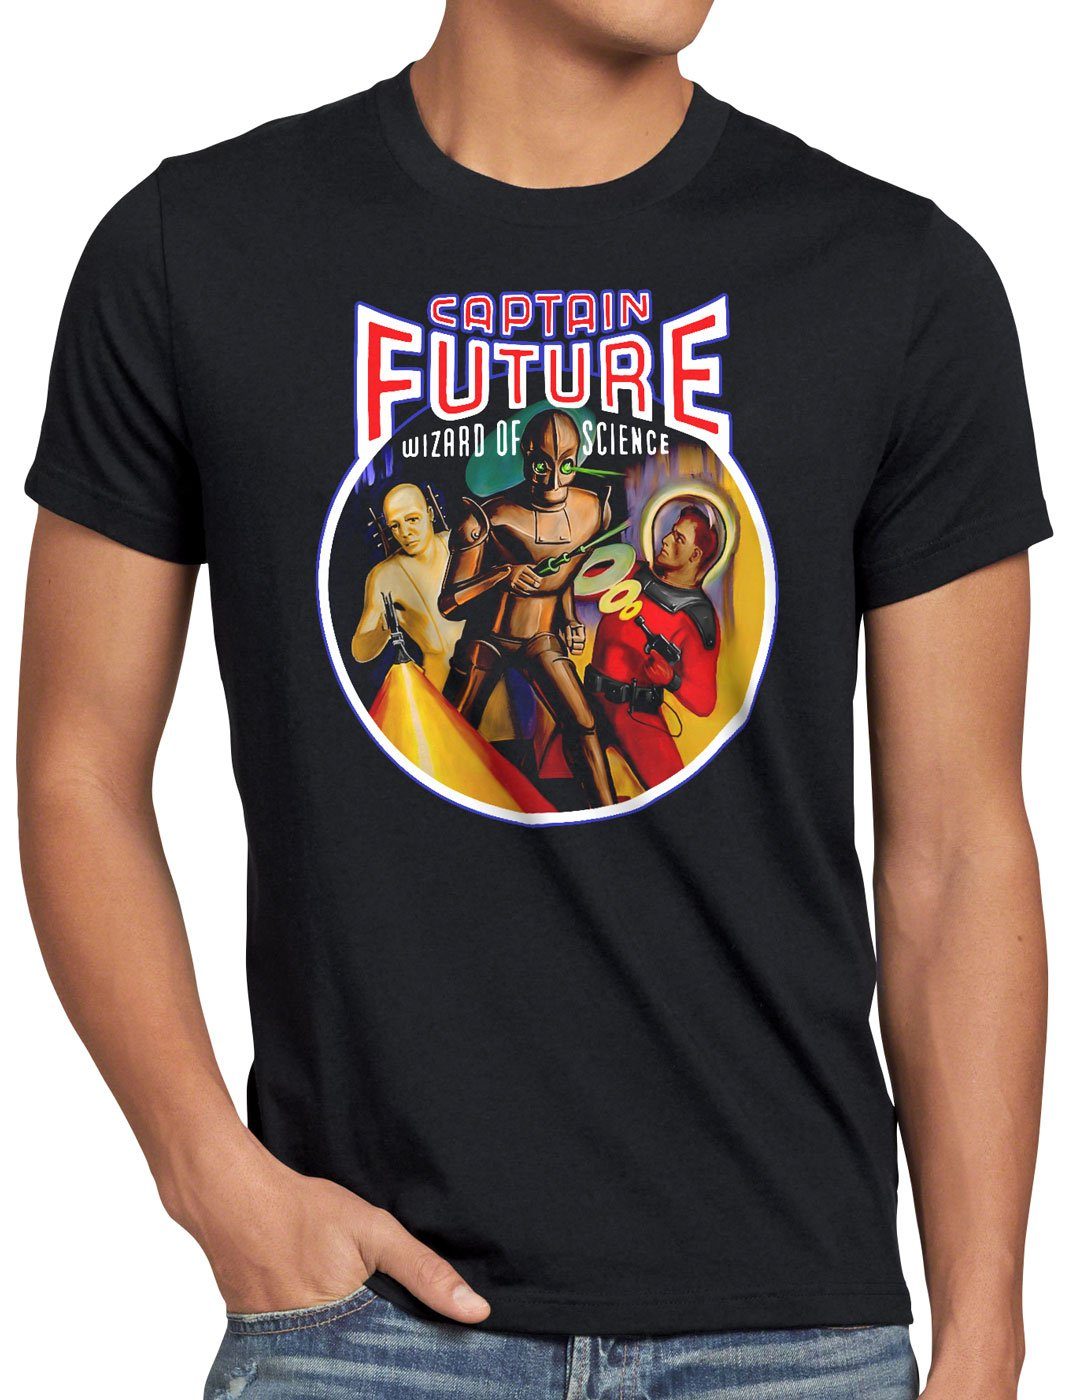 style3 Print-Shirt Future T-Shirt Cpt Herren comic raumschiff of Science captain Wizard